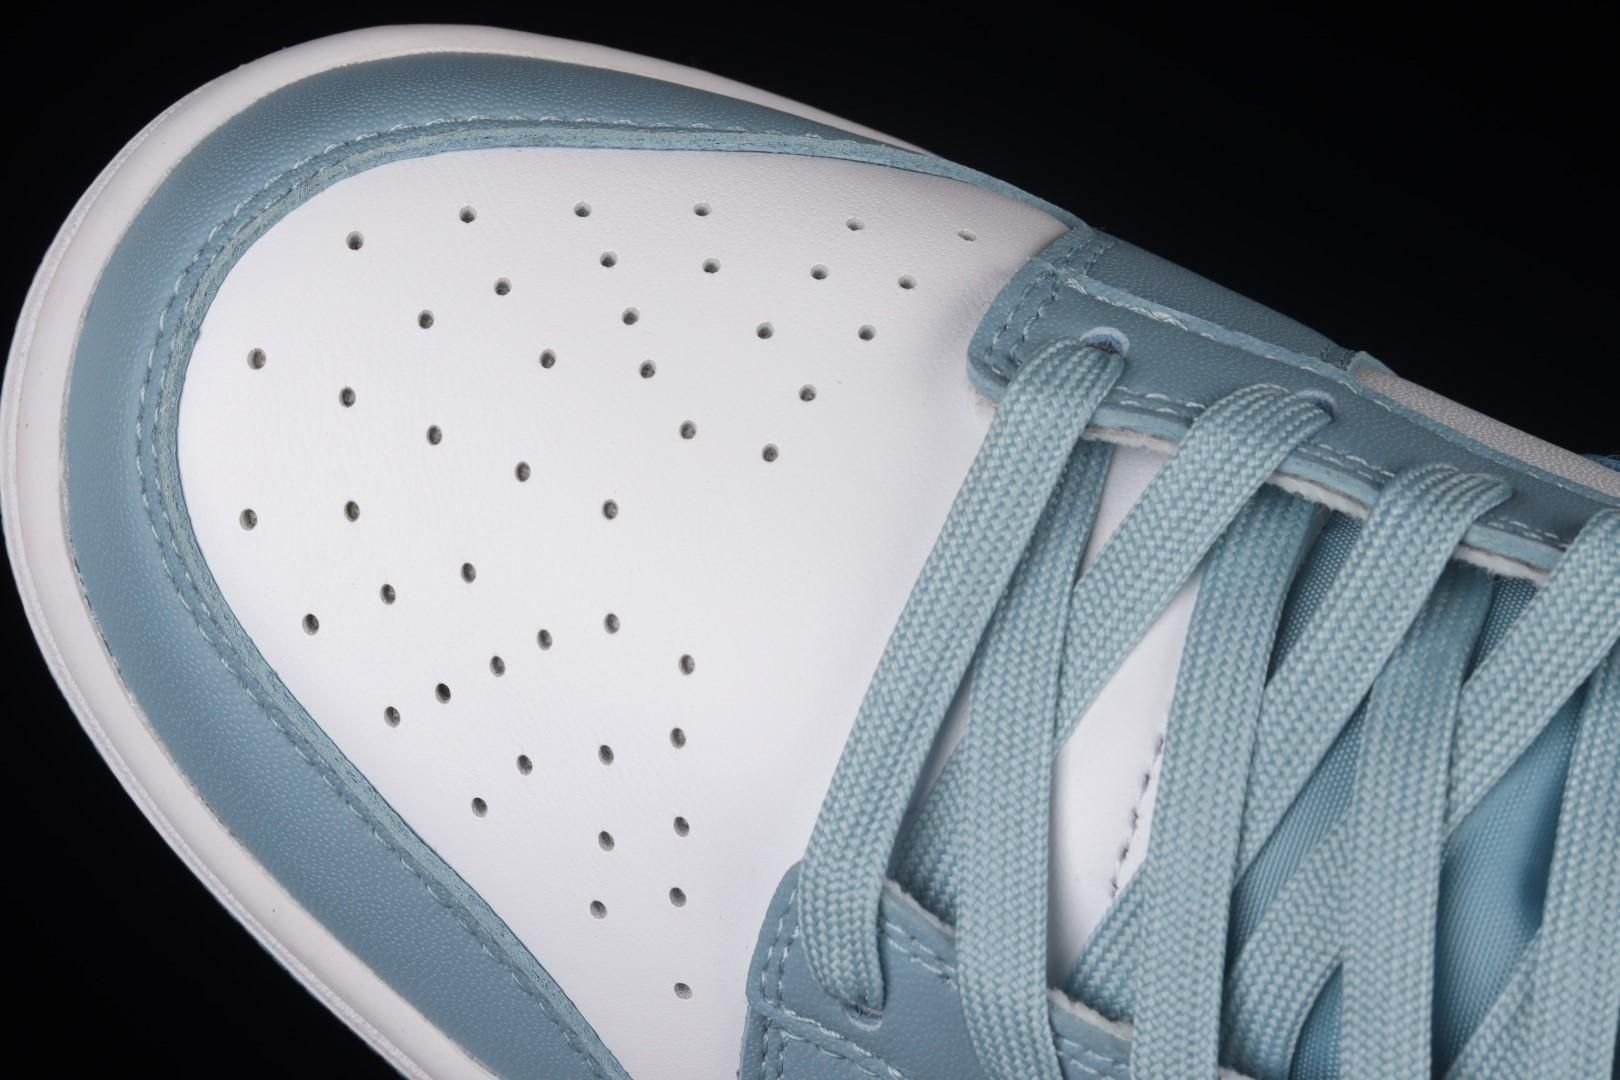 NikeMens Dunk Low - Blue Paisley